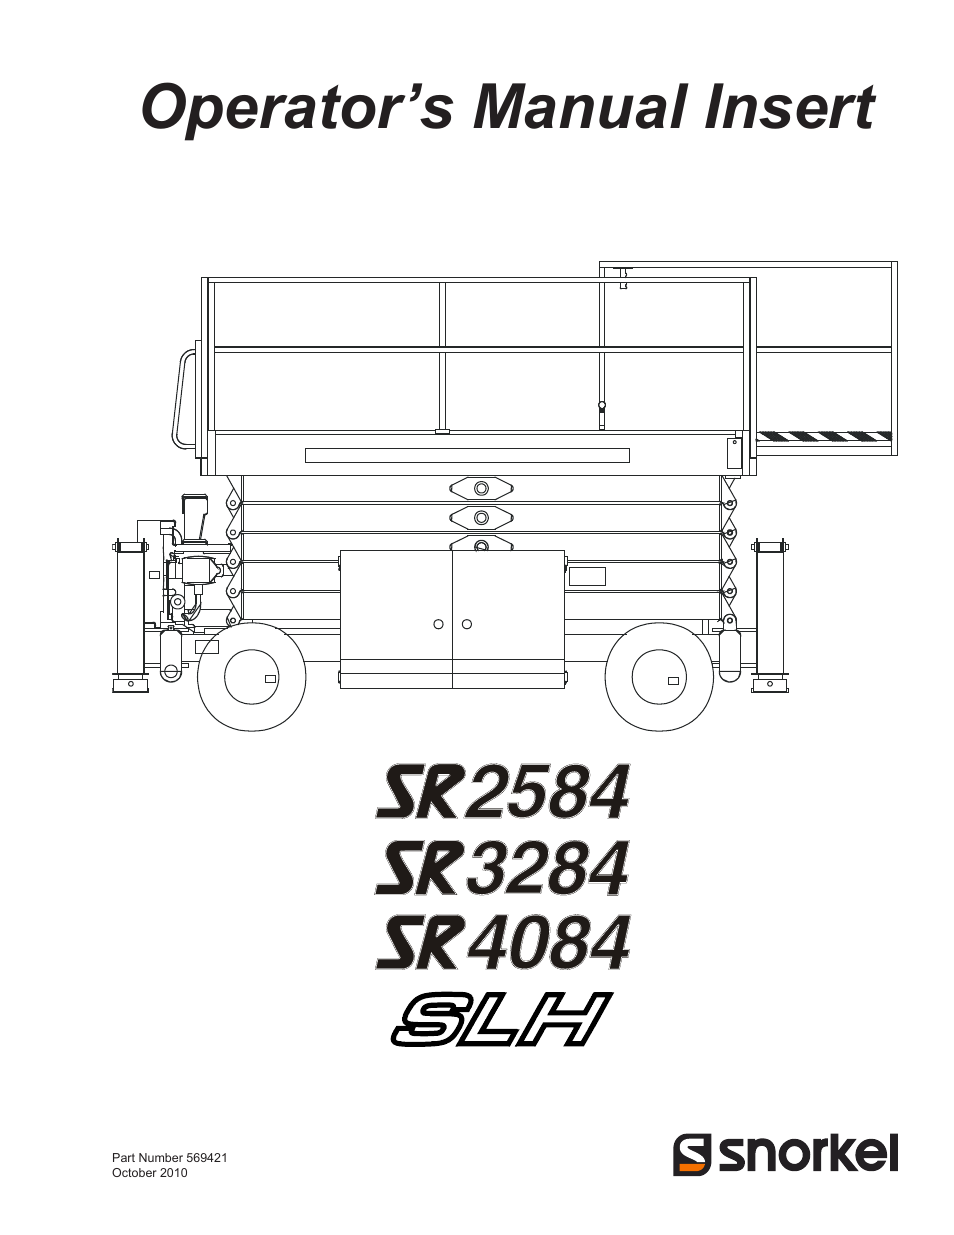 SR4084